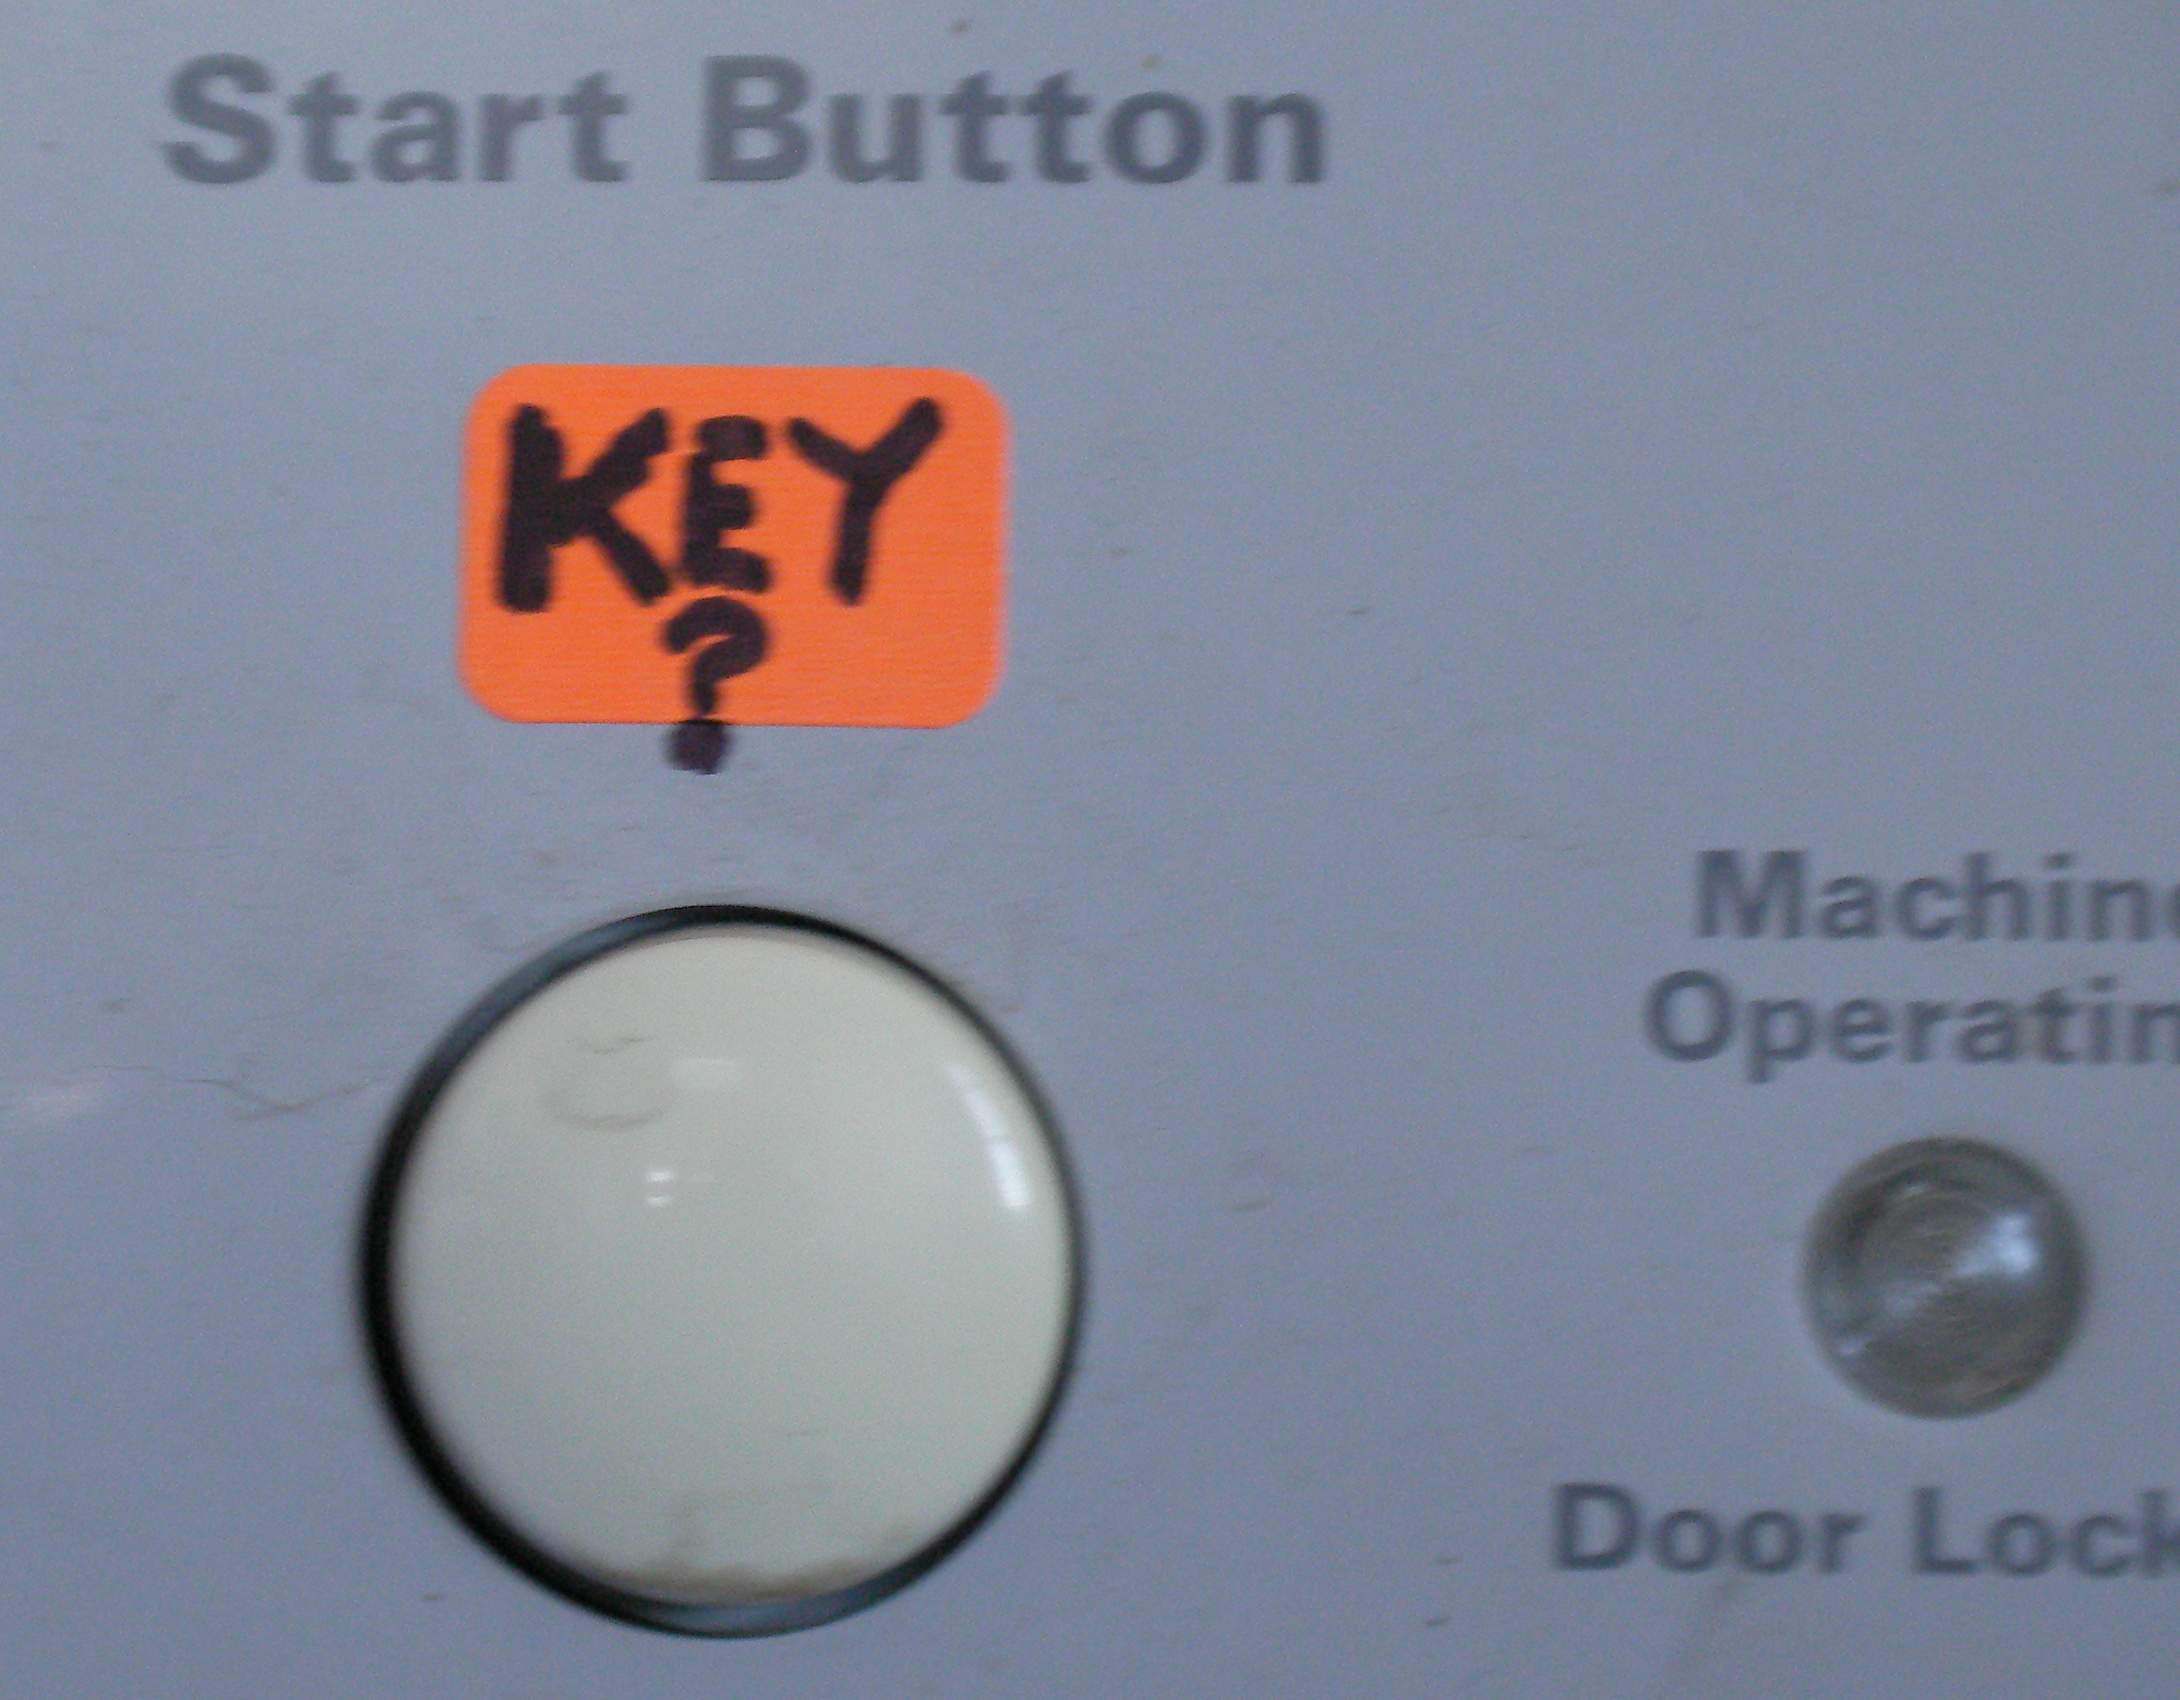 Key_key.jpg